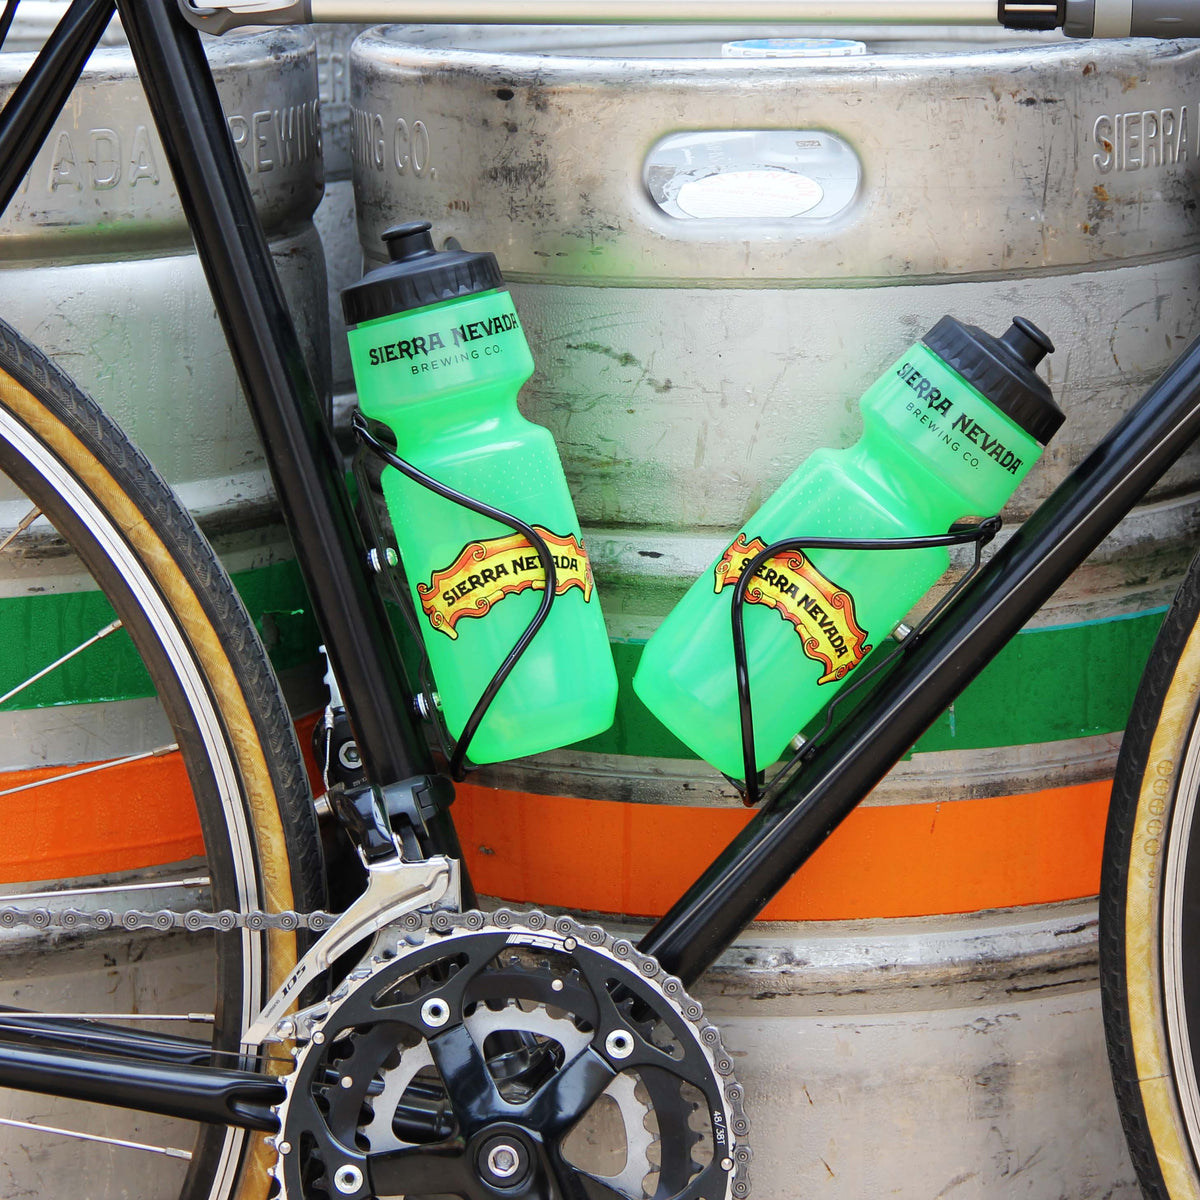 Sierra Nevada green water bottles in holders on a bicycle